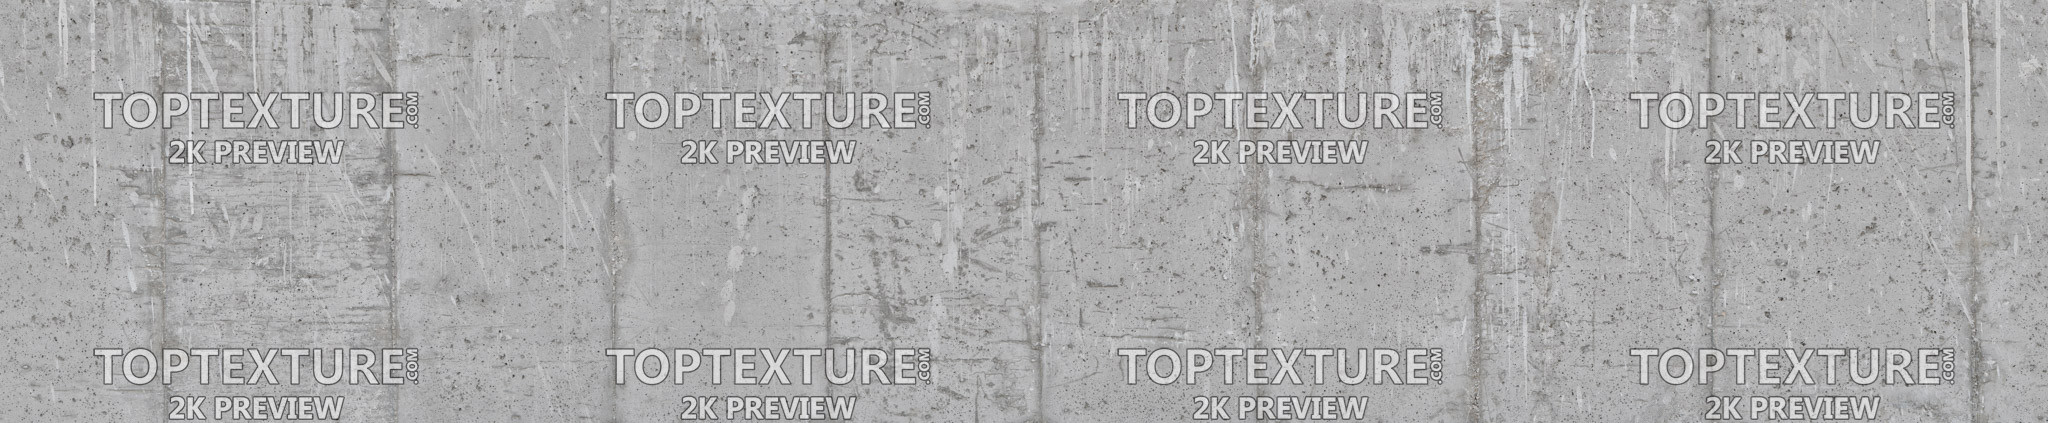 Rough Wall Concrete Plates - 2K preview